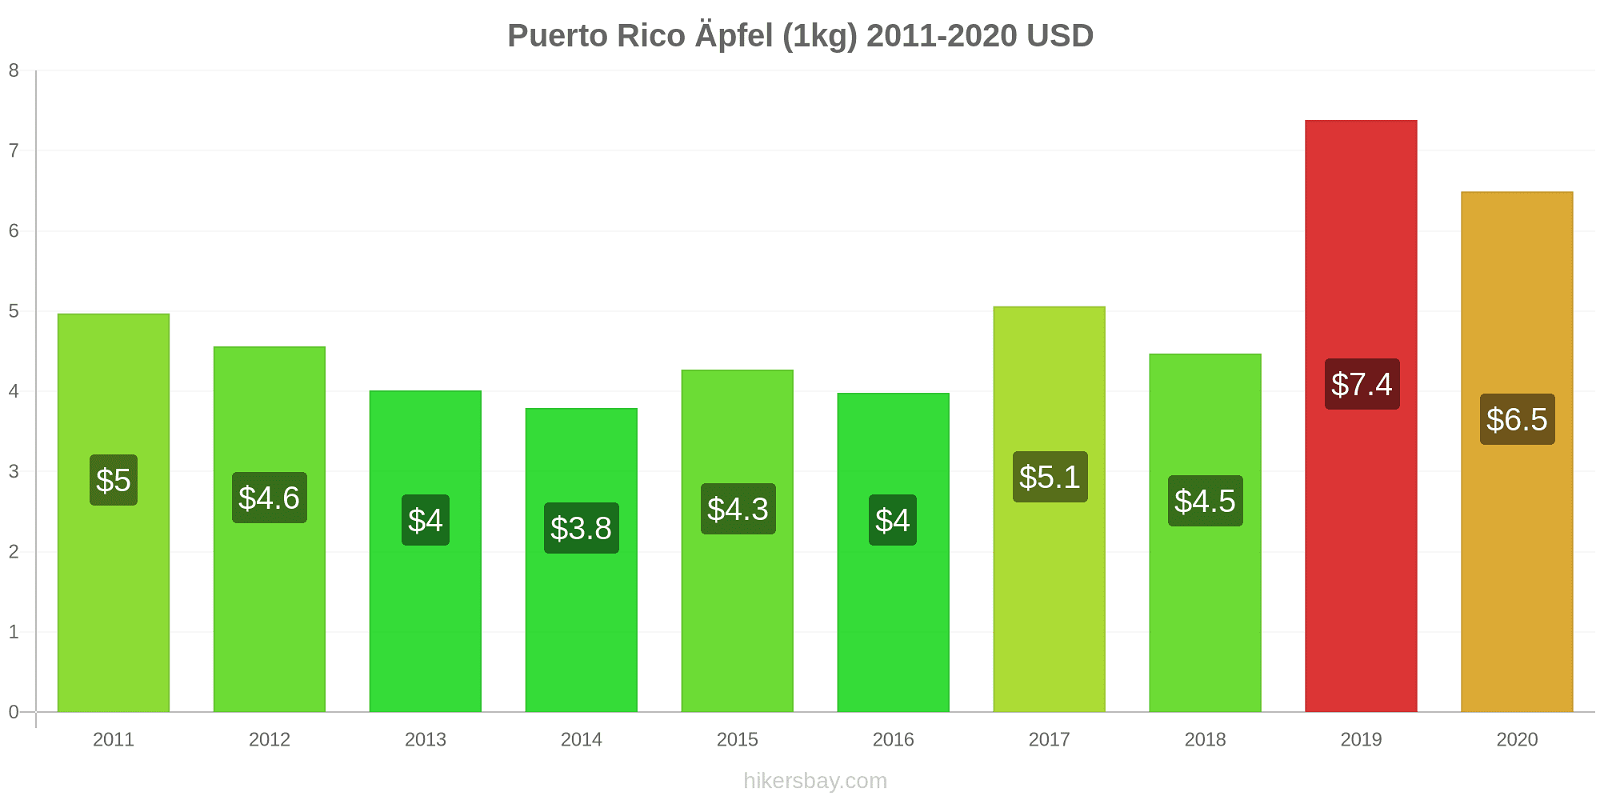 Puerto Rico Preisänderungen Äpfel (1kg) hikersbay.com